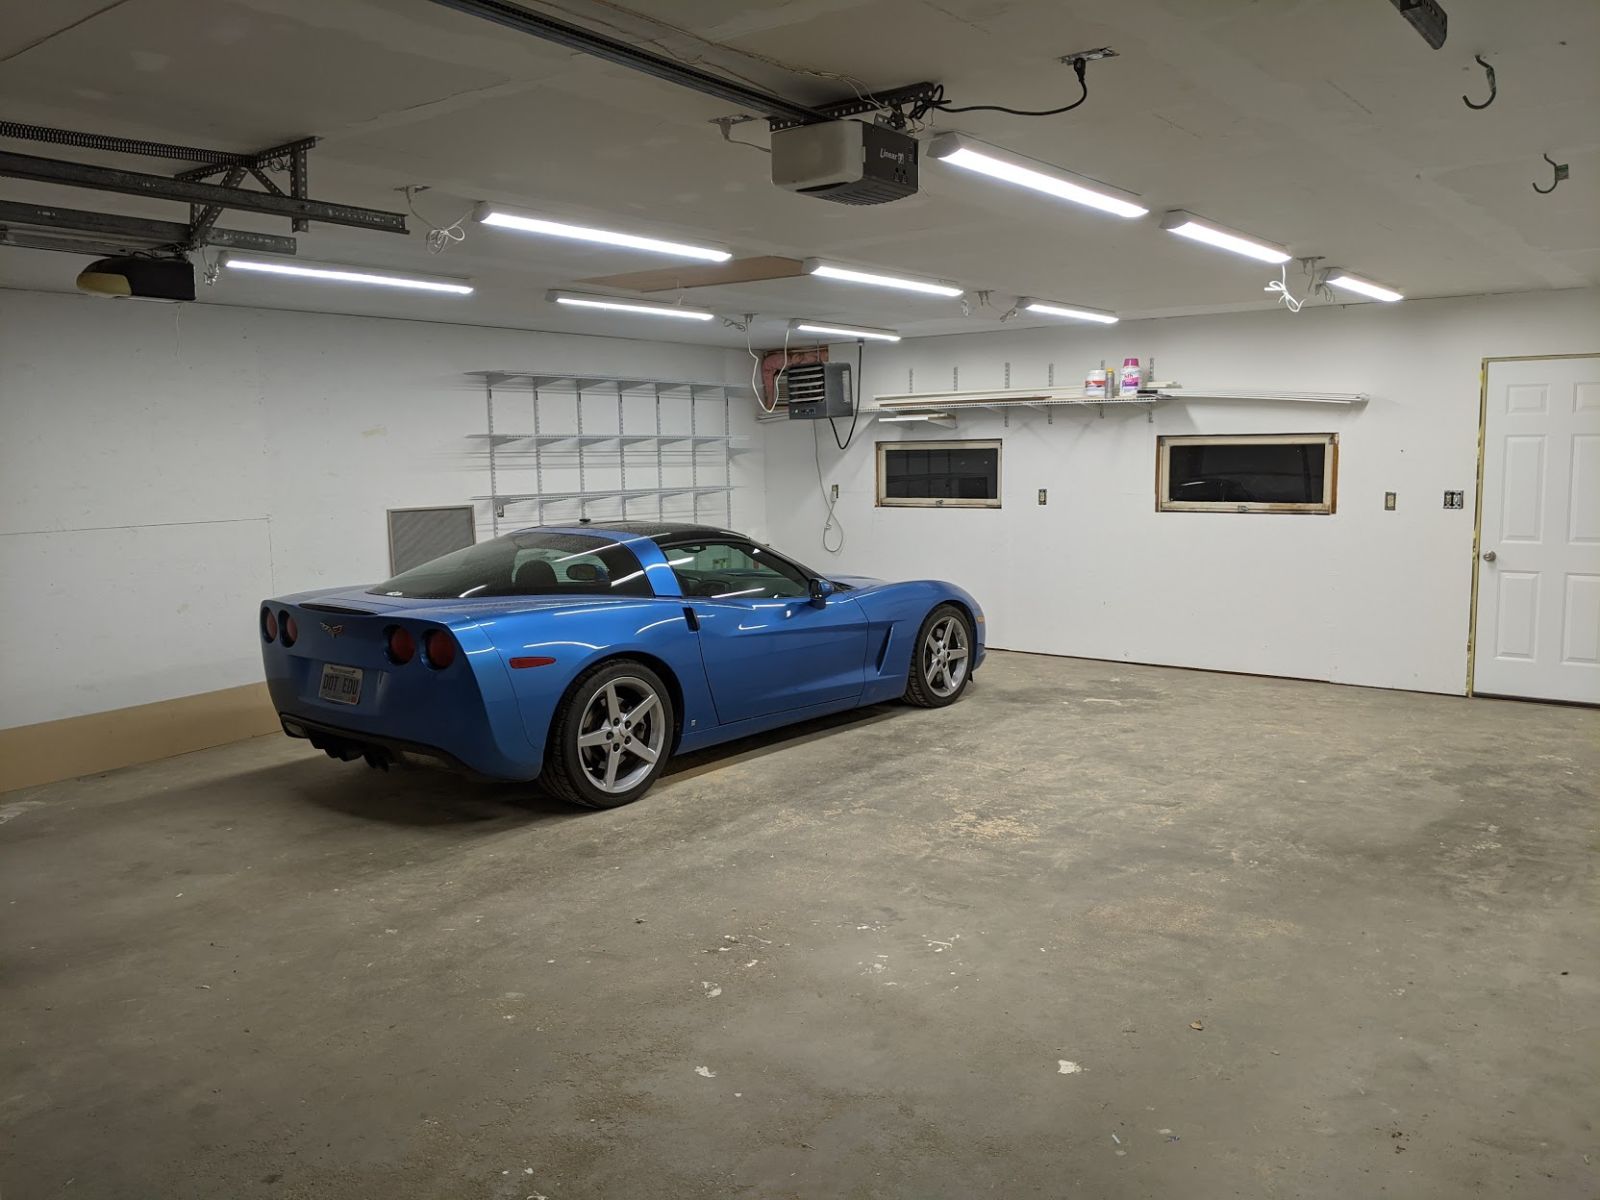 2008 Chevy Corvette in empty garage